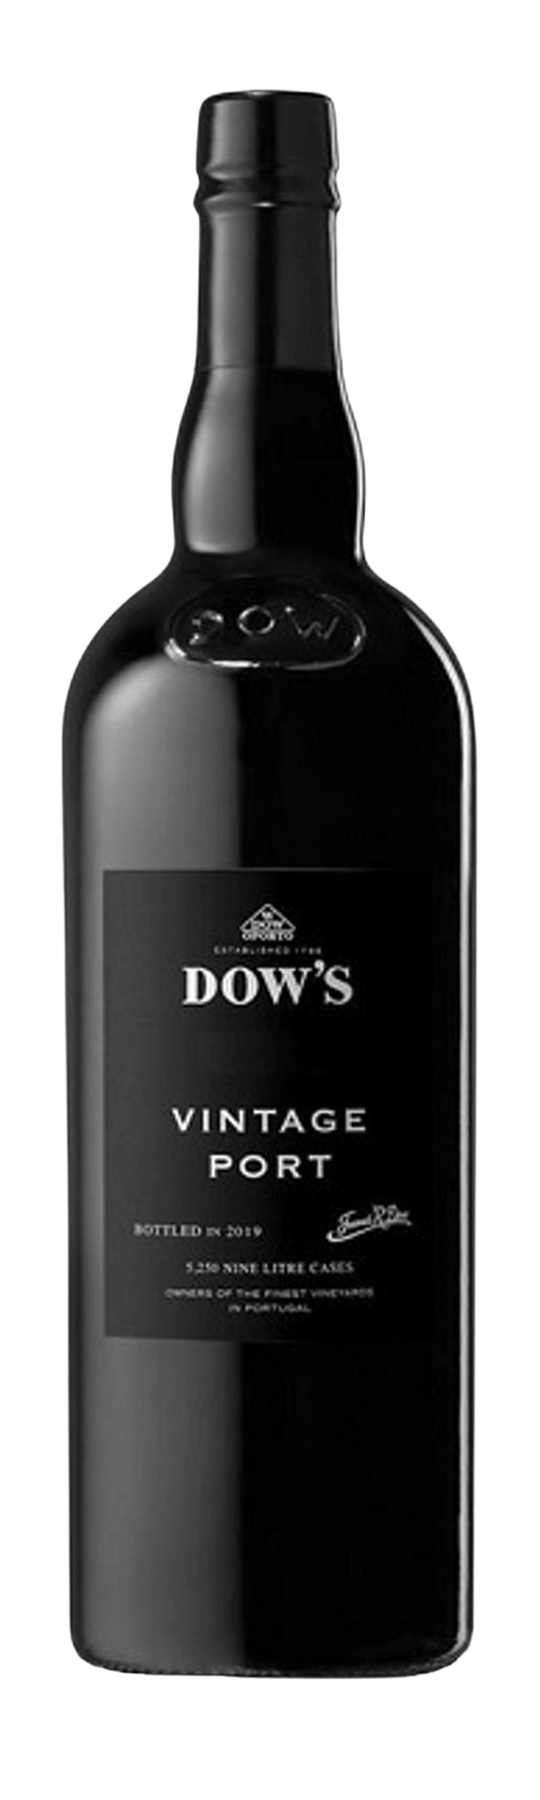 Dow's Vintage 20% 2016 75cl